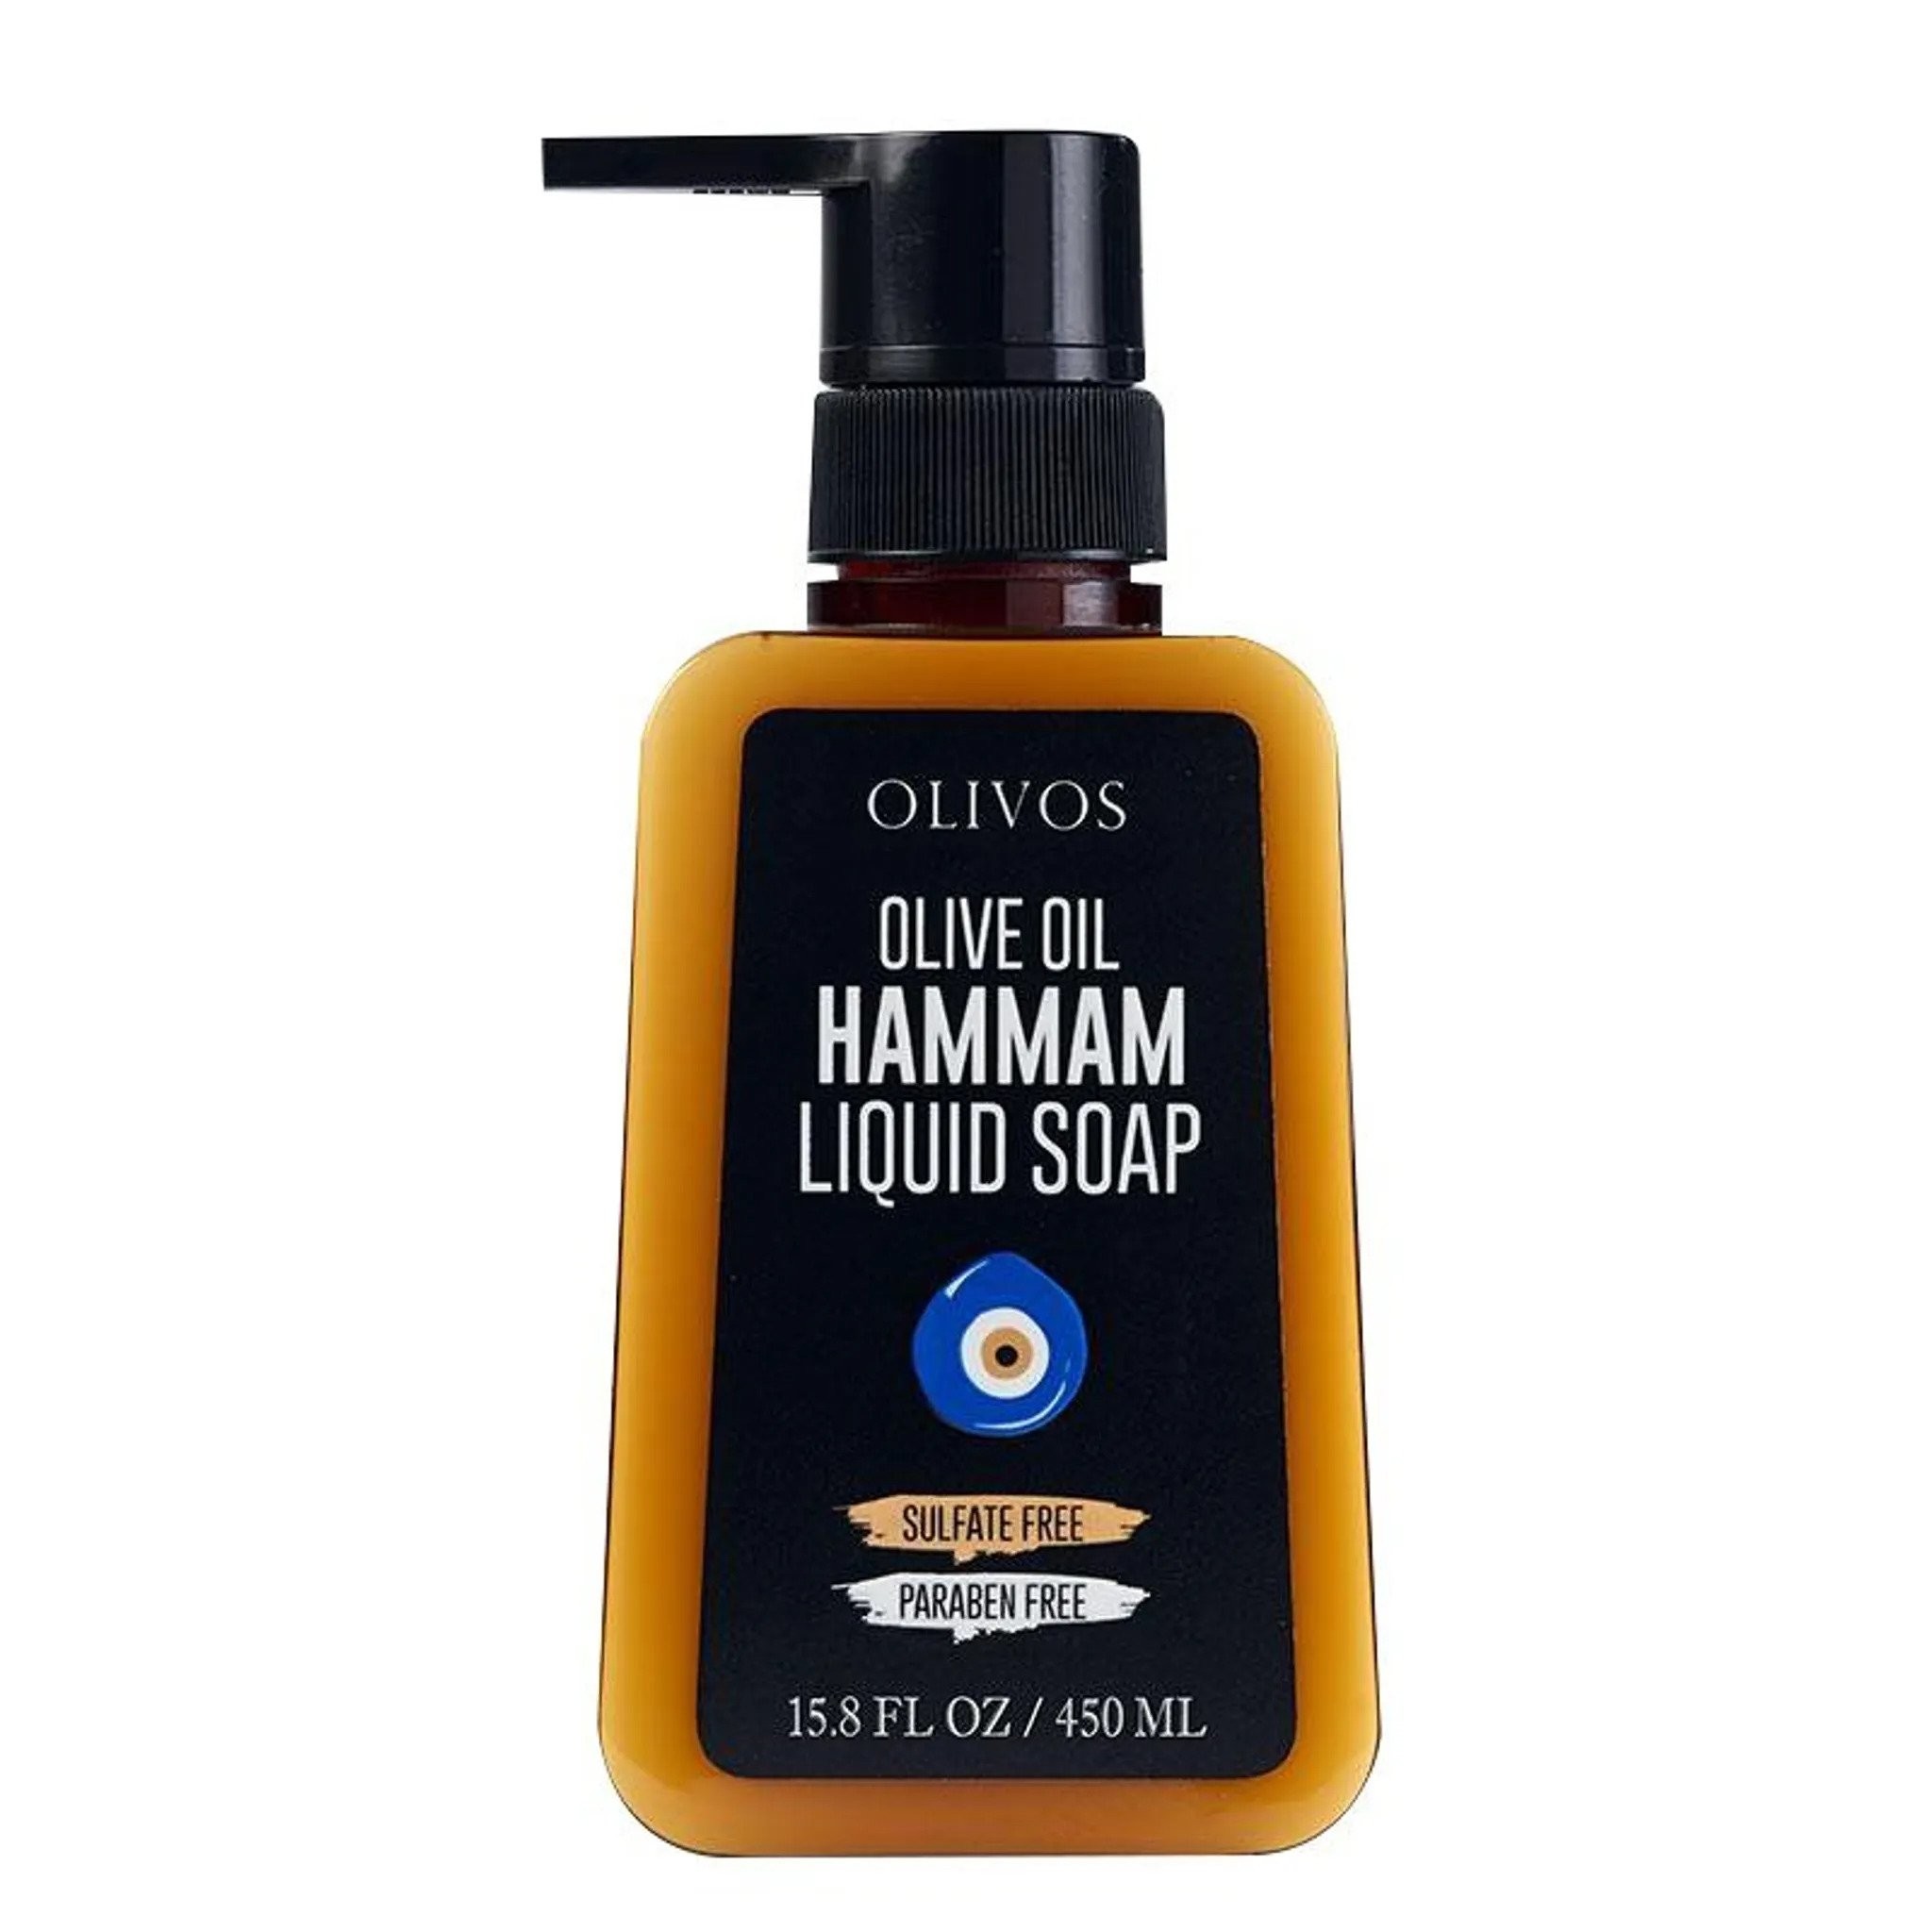 Sapun lichid cu ulei de masline, Hammam - reteta originala Olivos, 450 ml